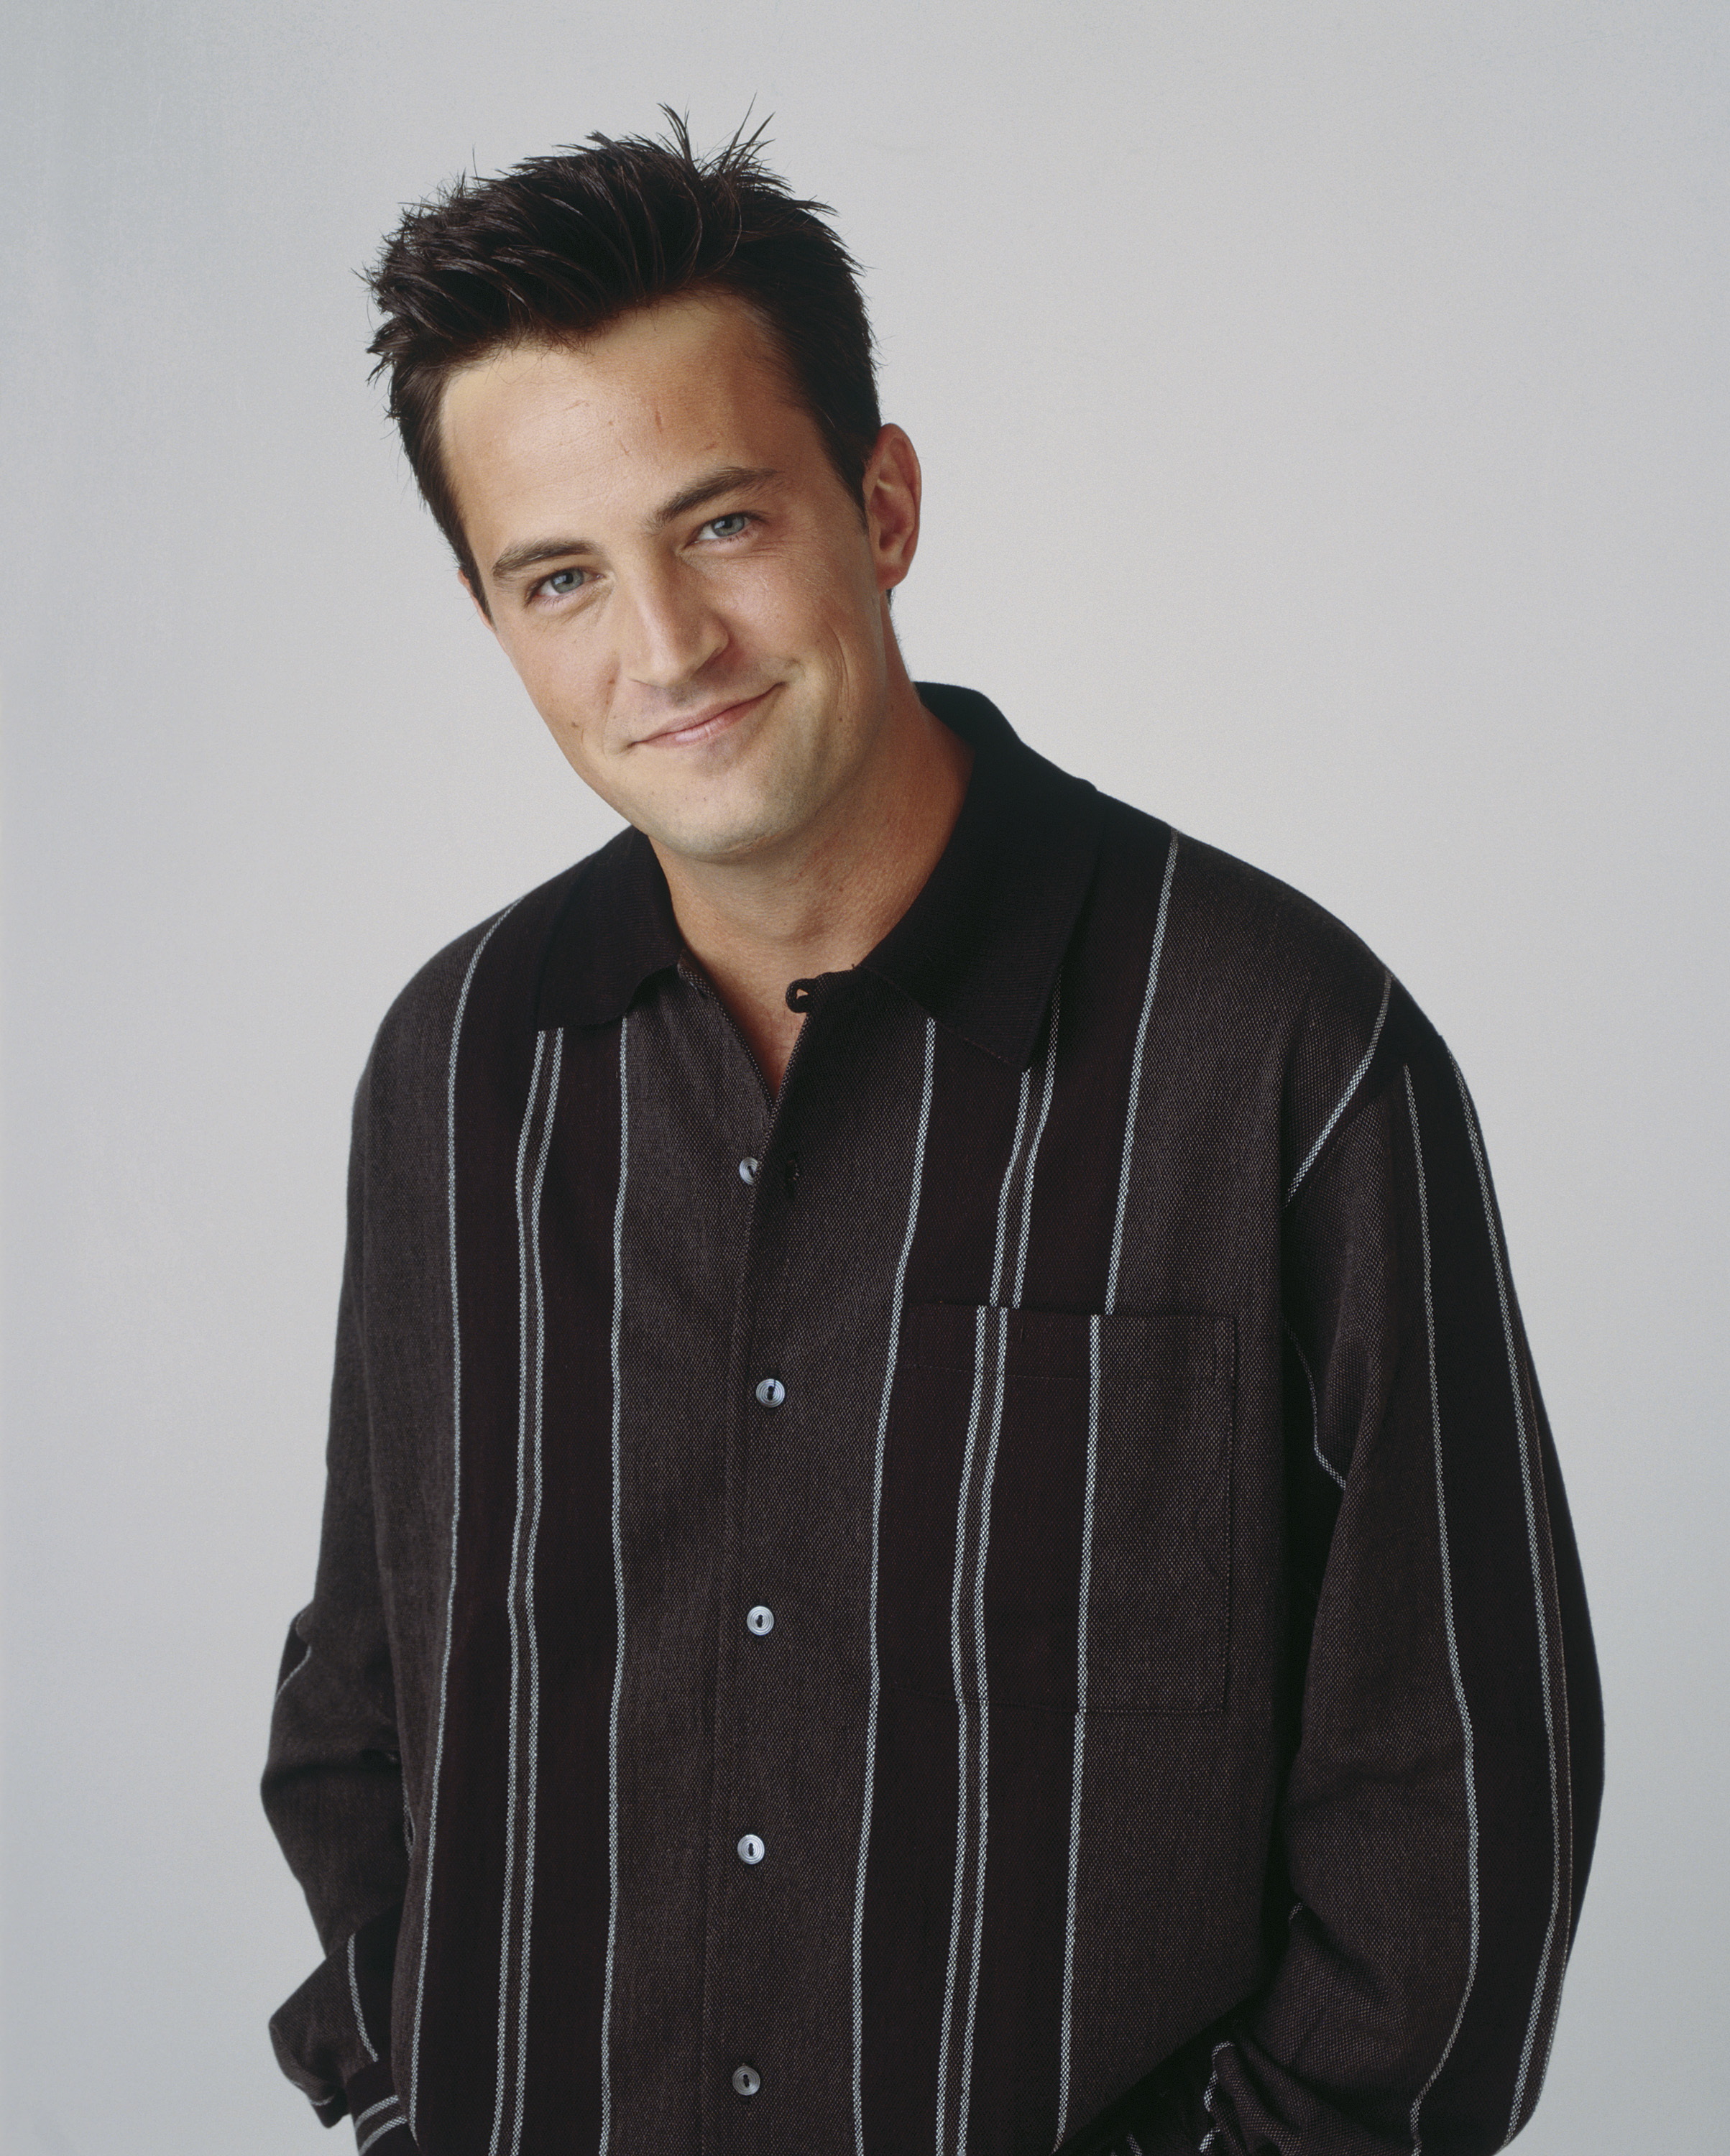 Matthew played Chandler Bing on the legendary US sitcom